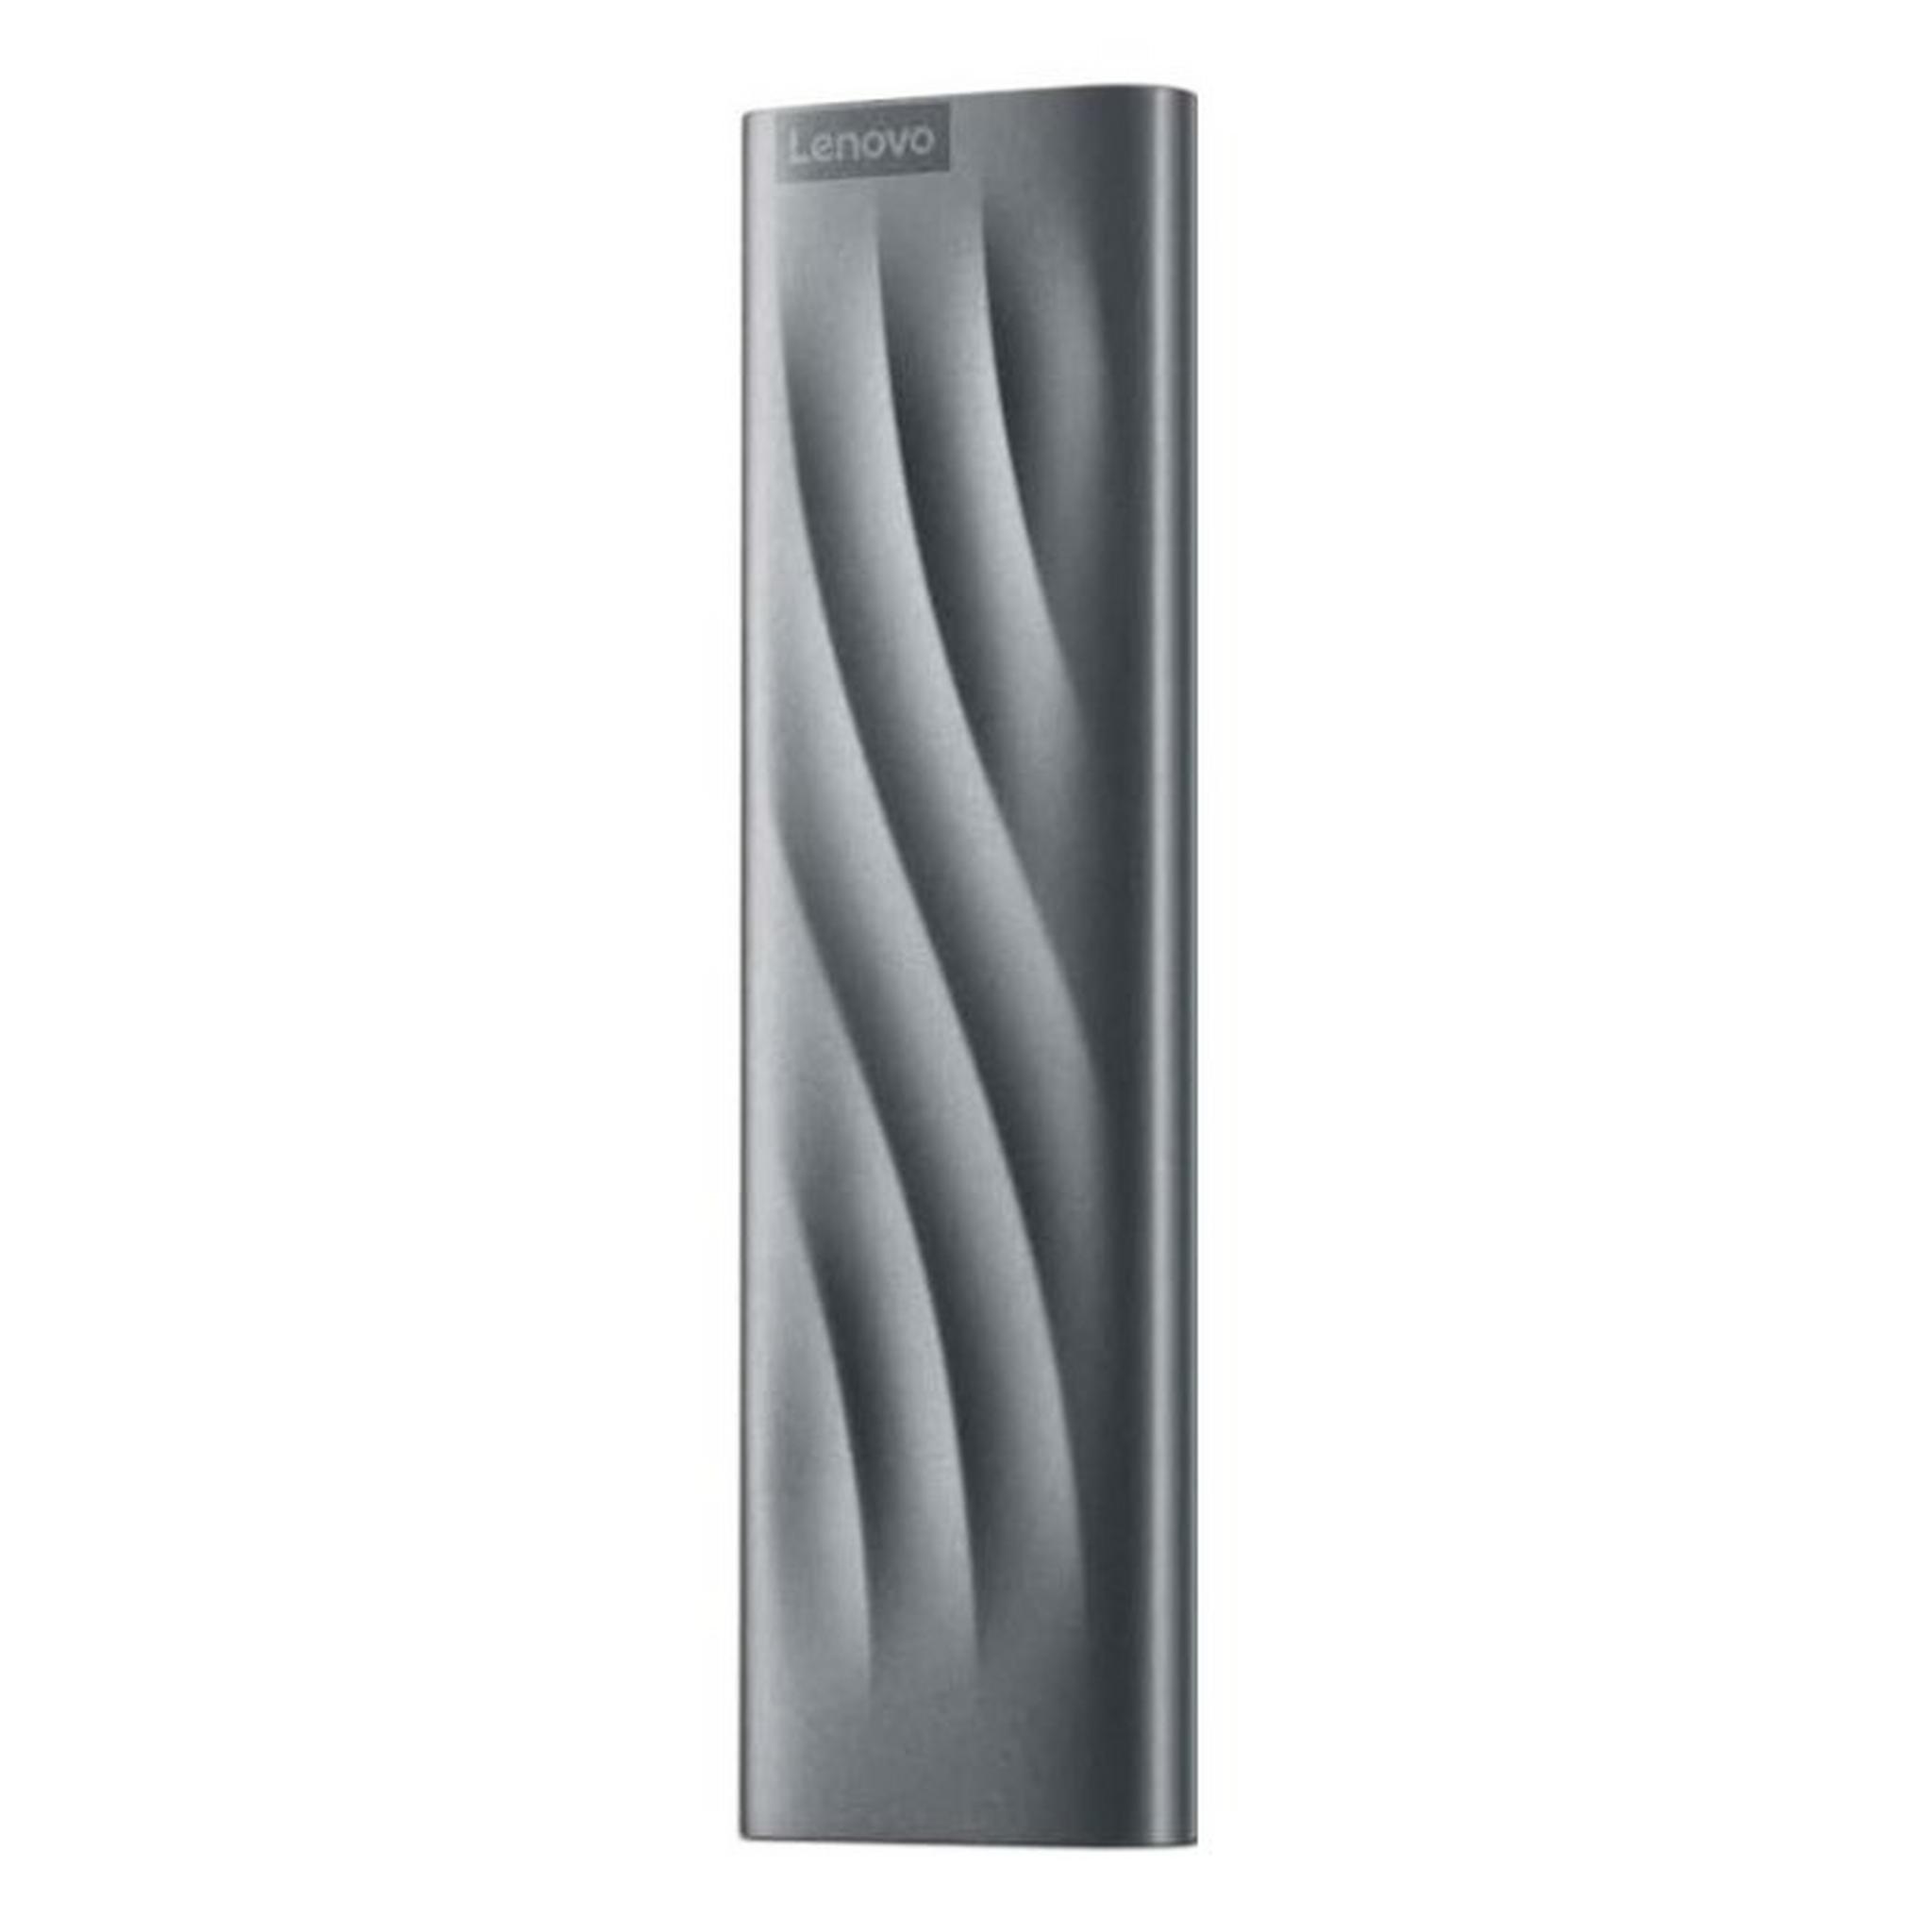 Lenovo PS8 Portable Hard Drive, 4TB SSD, GXB1M24162 – Silver